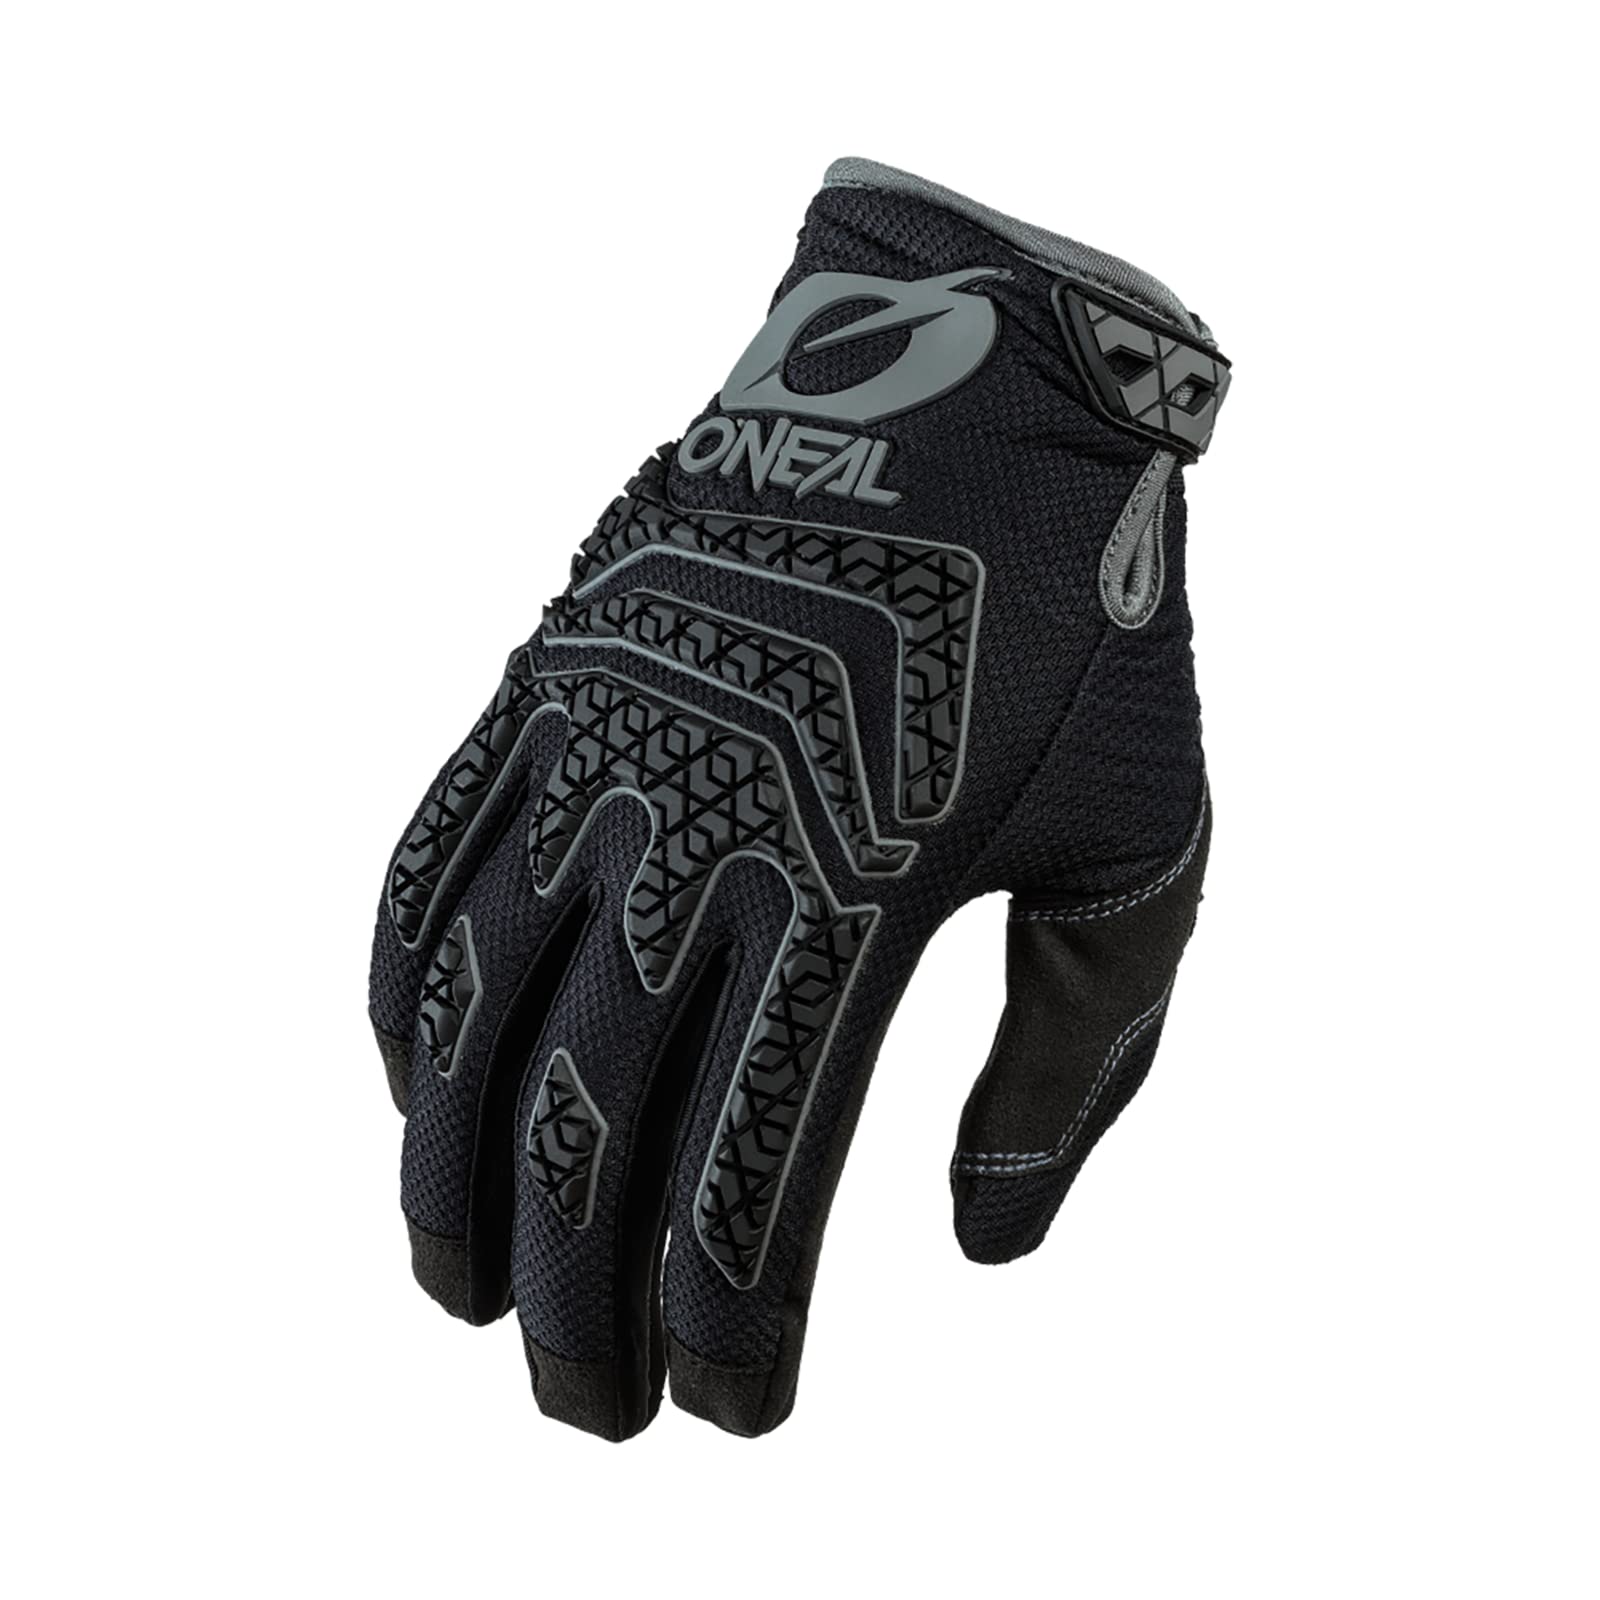 O'NEAL | Fahrrad- & Motocross-Handschuhe | MX MTB DH FR Downhill Freeride | Langlebige, Flexible Materialien, Silikonprint für Grip | Sniper Elite Glove | Erwachsene | Schwarz Grau | Größe L von O'NEAL